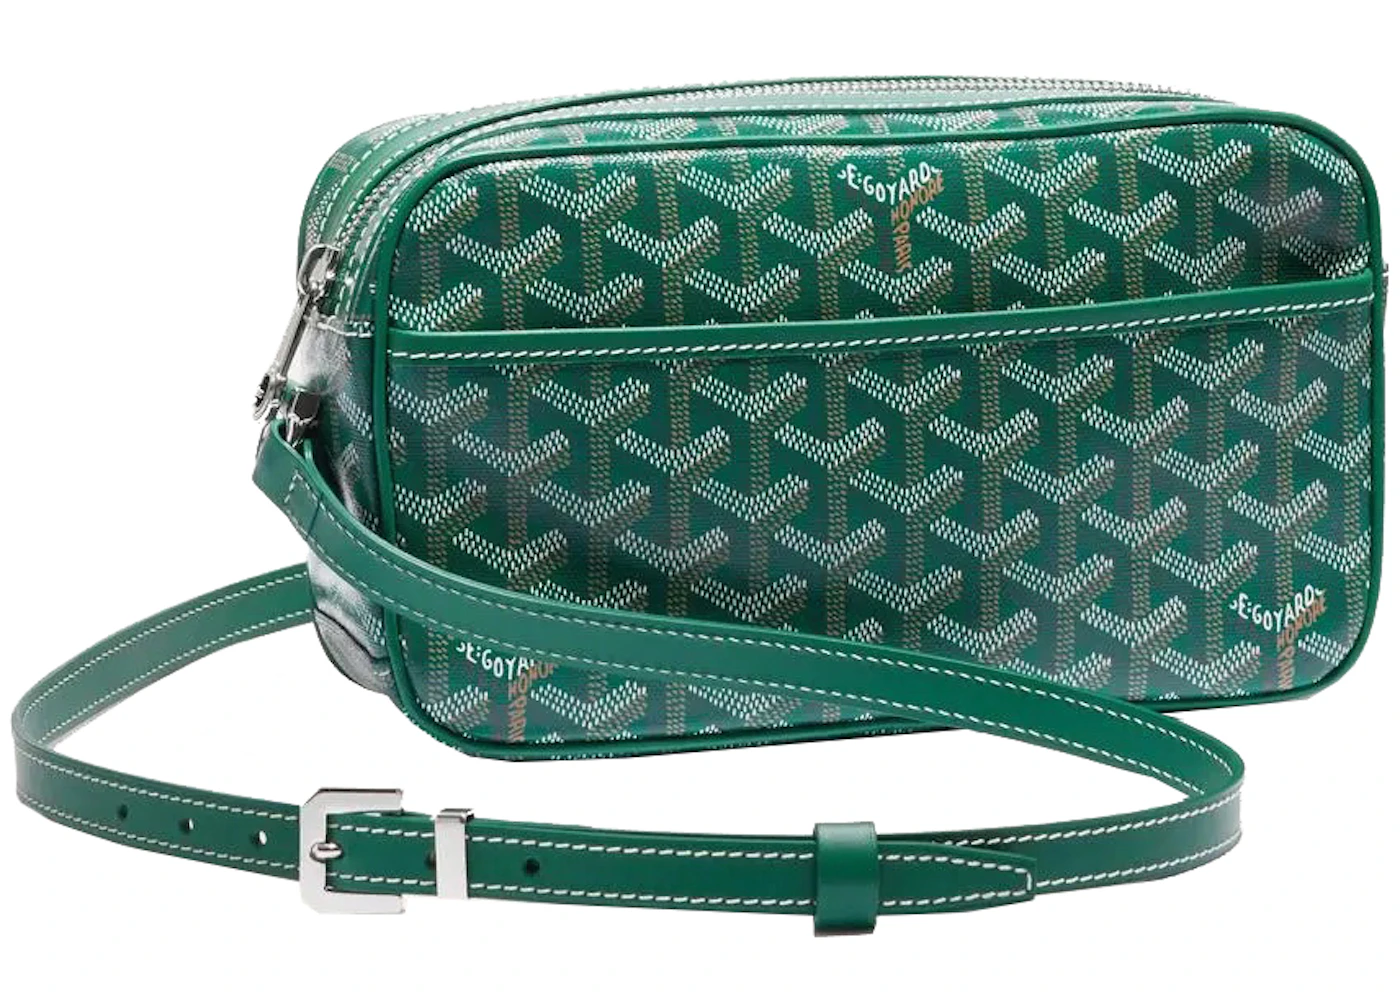 Cap-Vert PM Bag  Bags, Goyard, Luxury bags